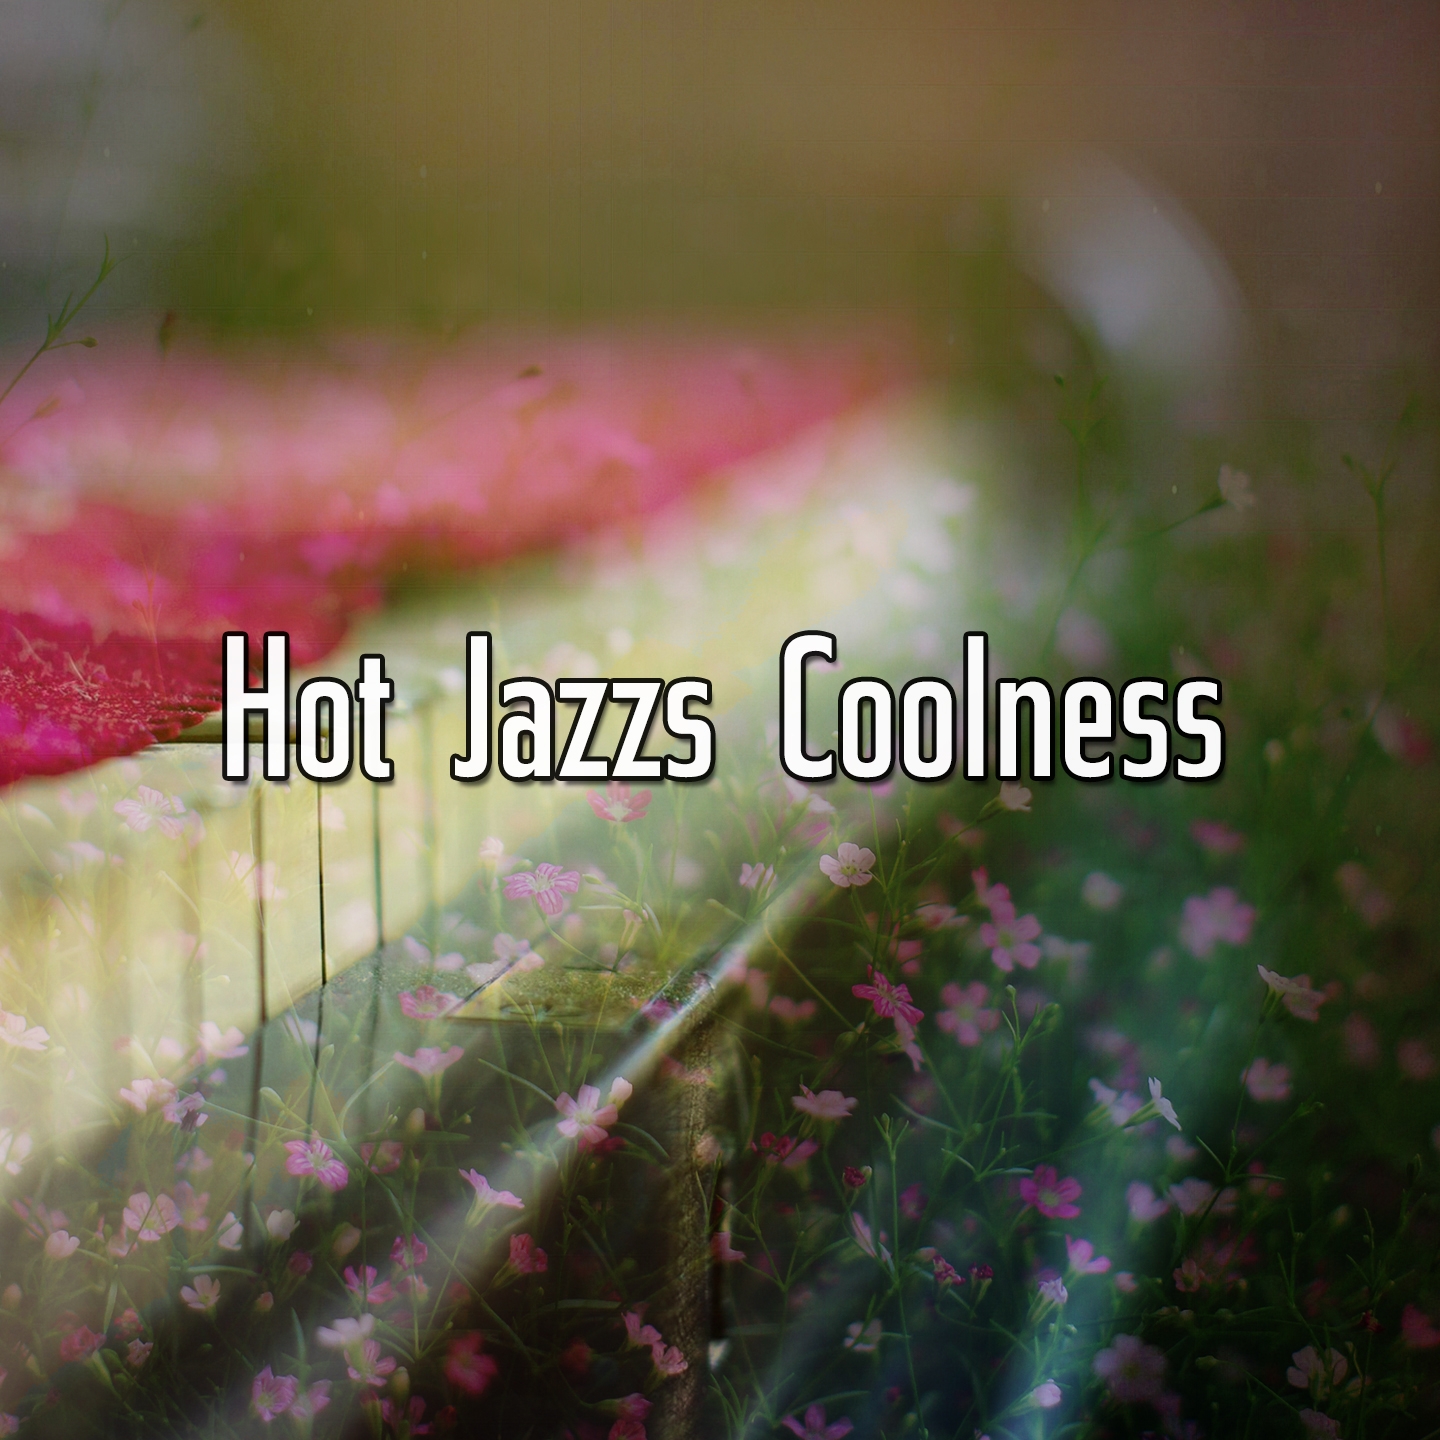 Hot Jazzs Coolness